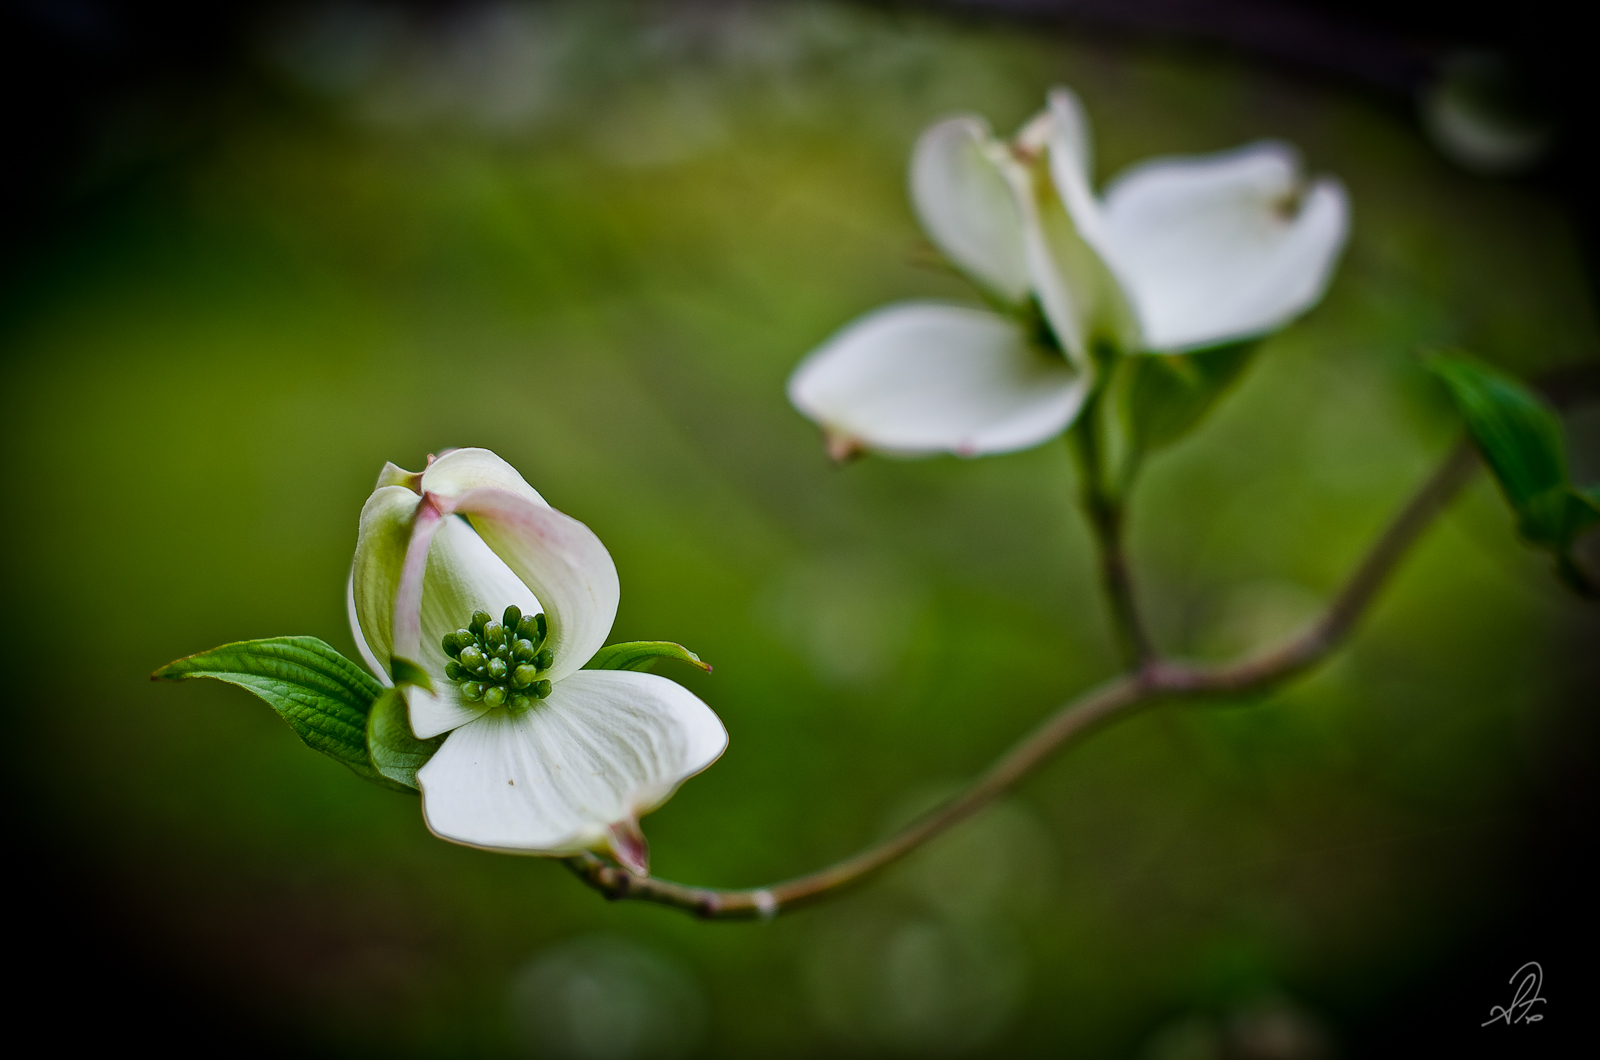 Dogwood Flower Bloom in Spring